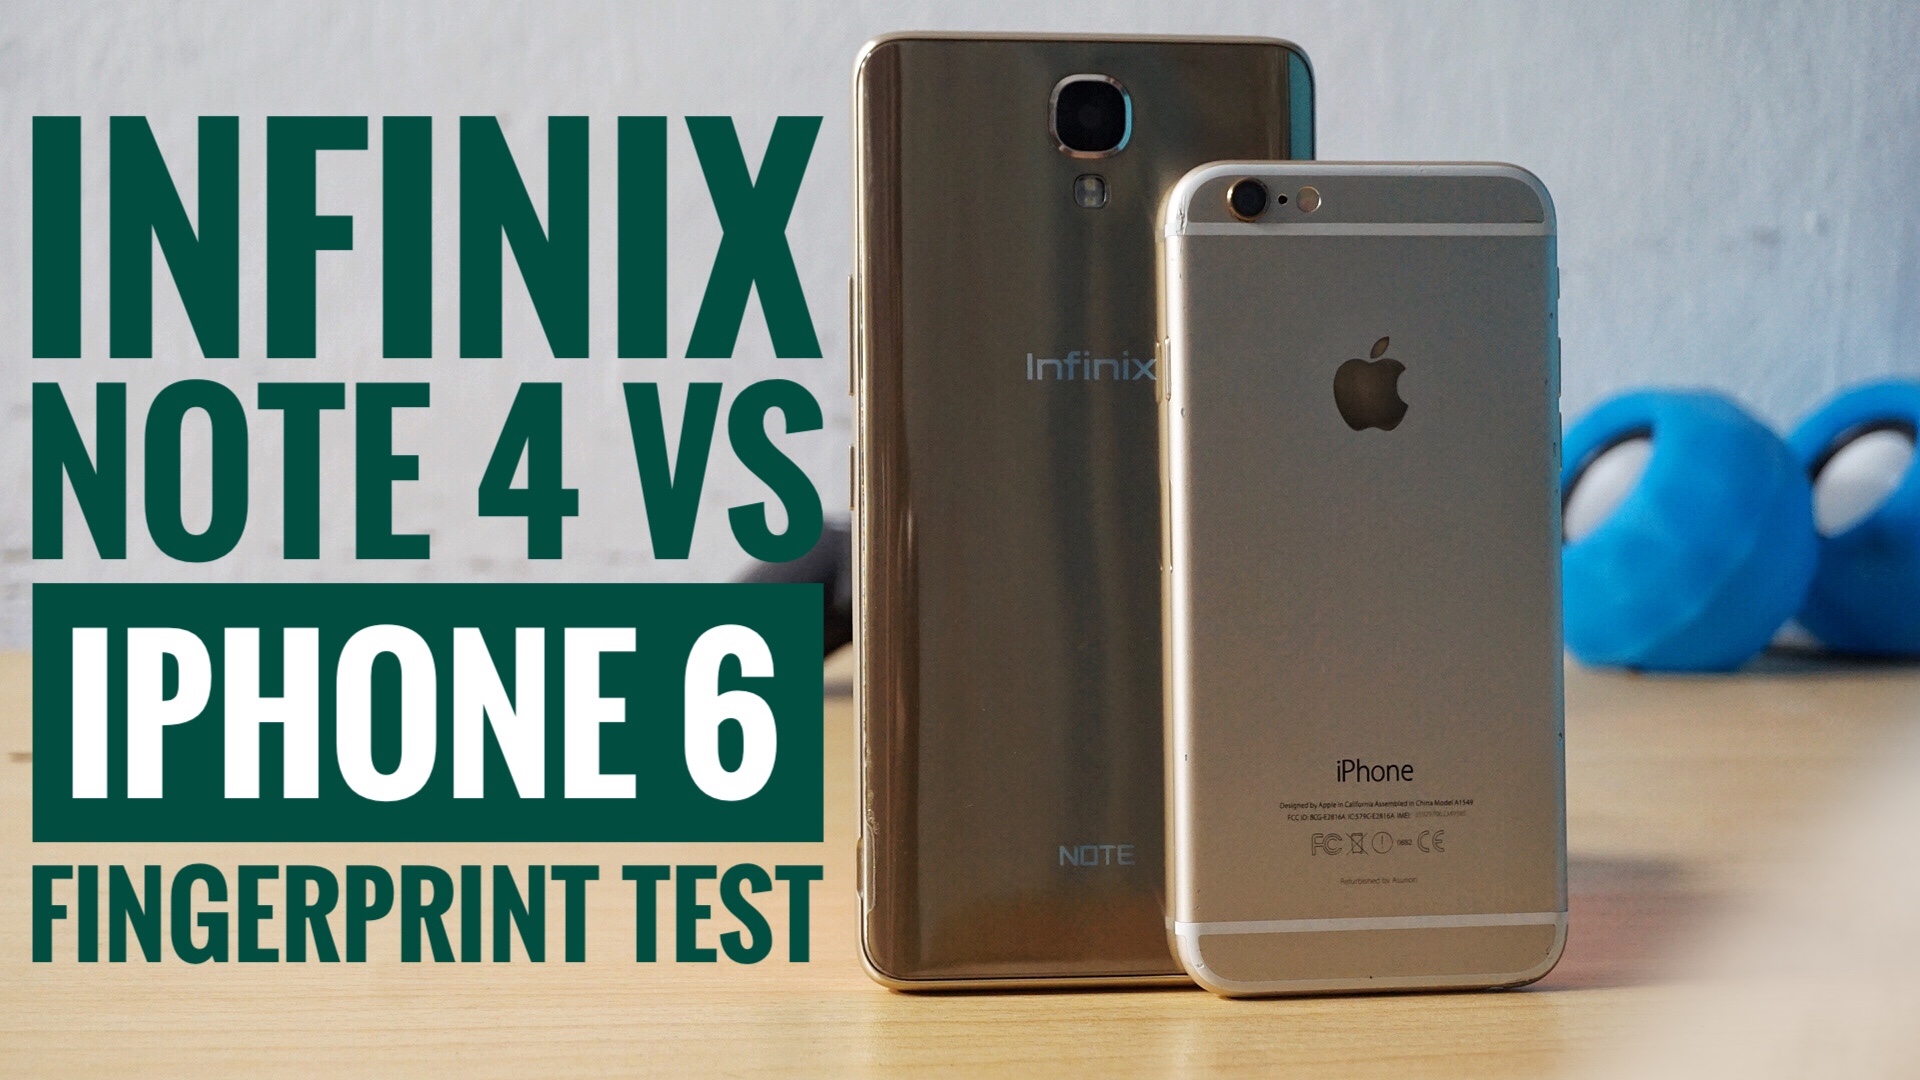 Infinix Note 4 VS iPhone 6 fingerprint unlocking test